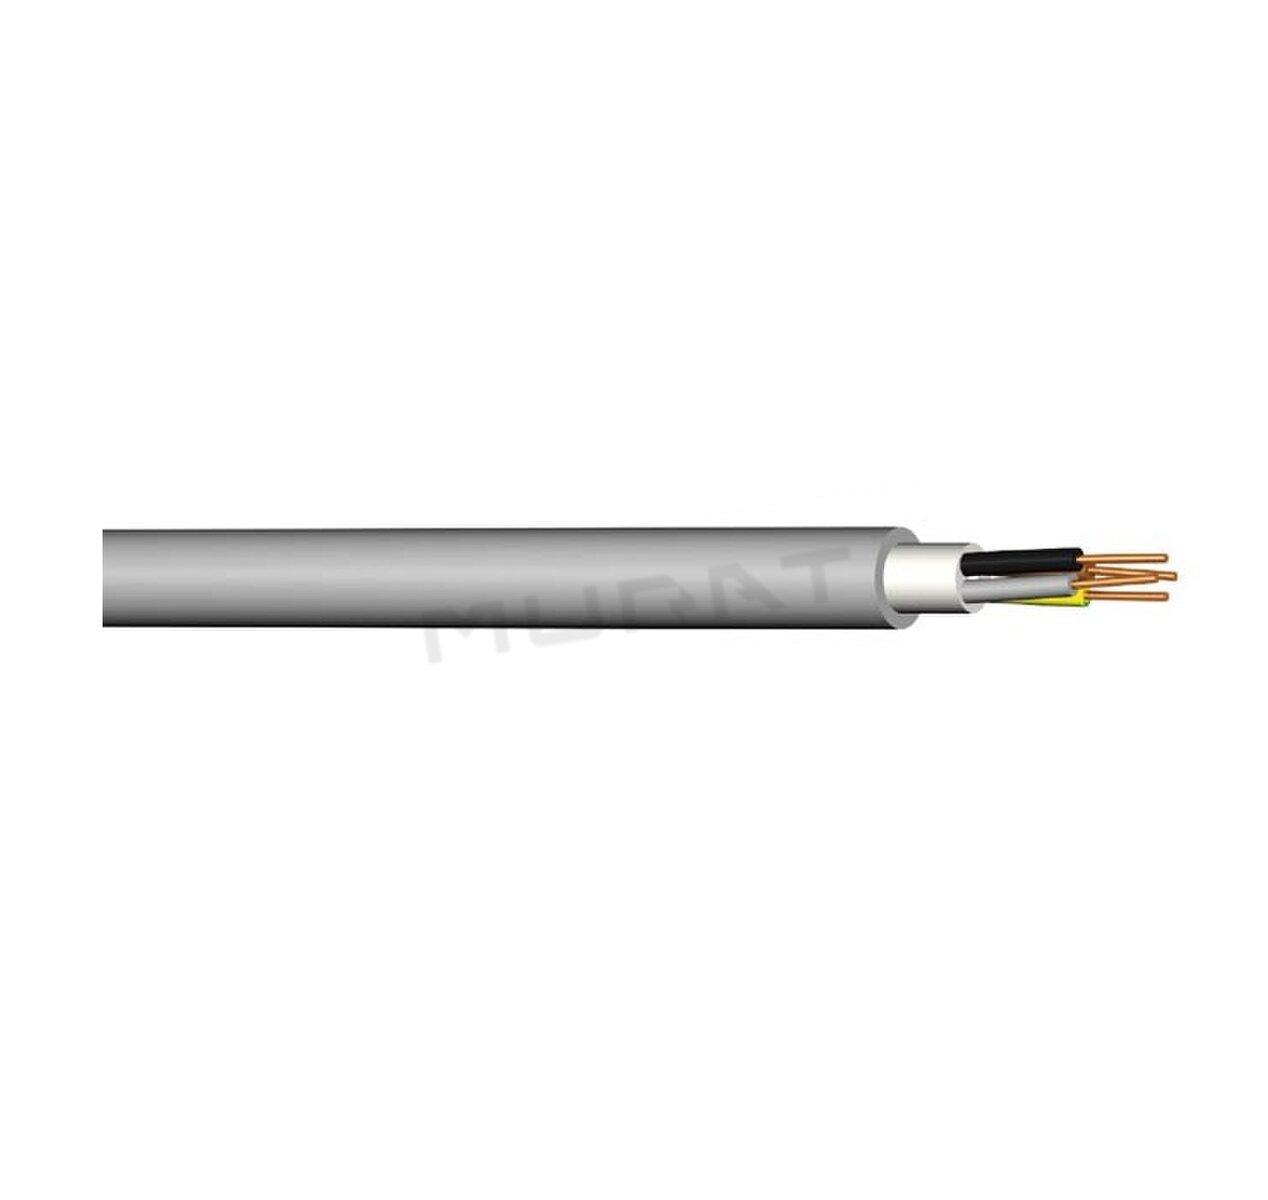 Kábel NYM-J 4x16 mm2